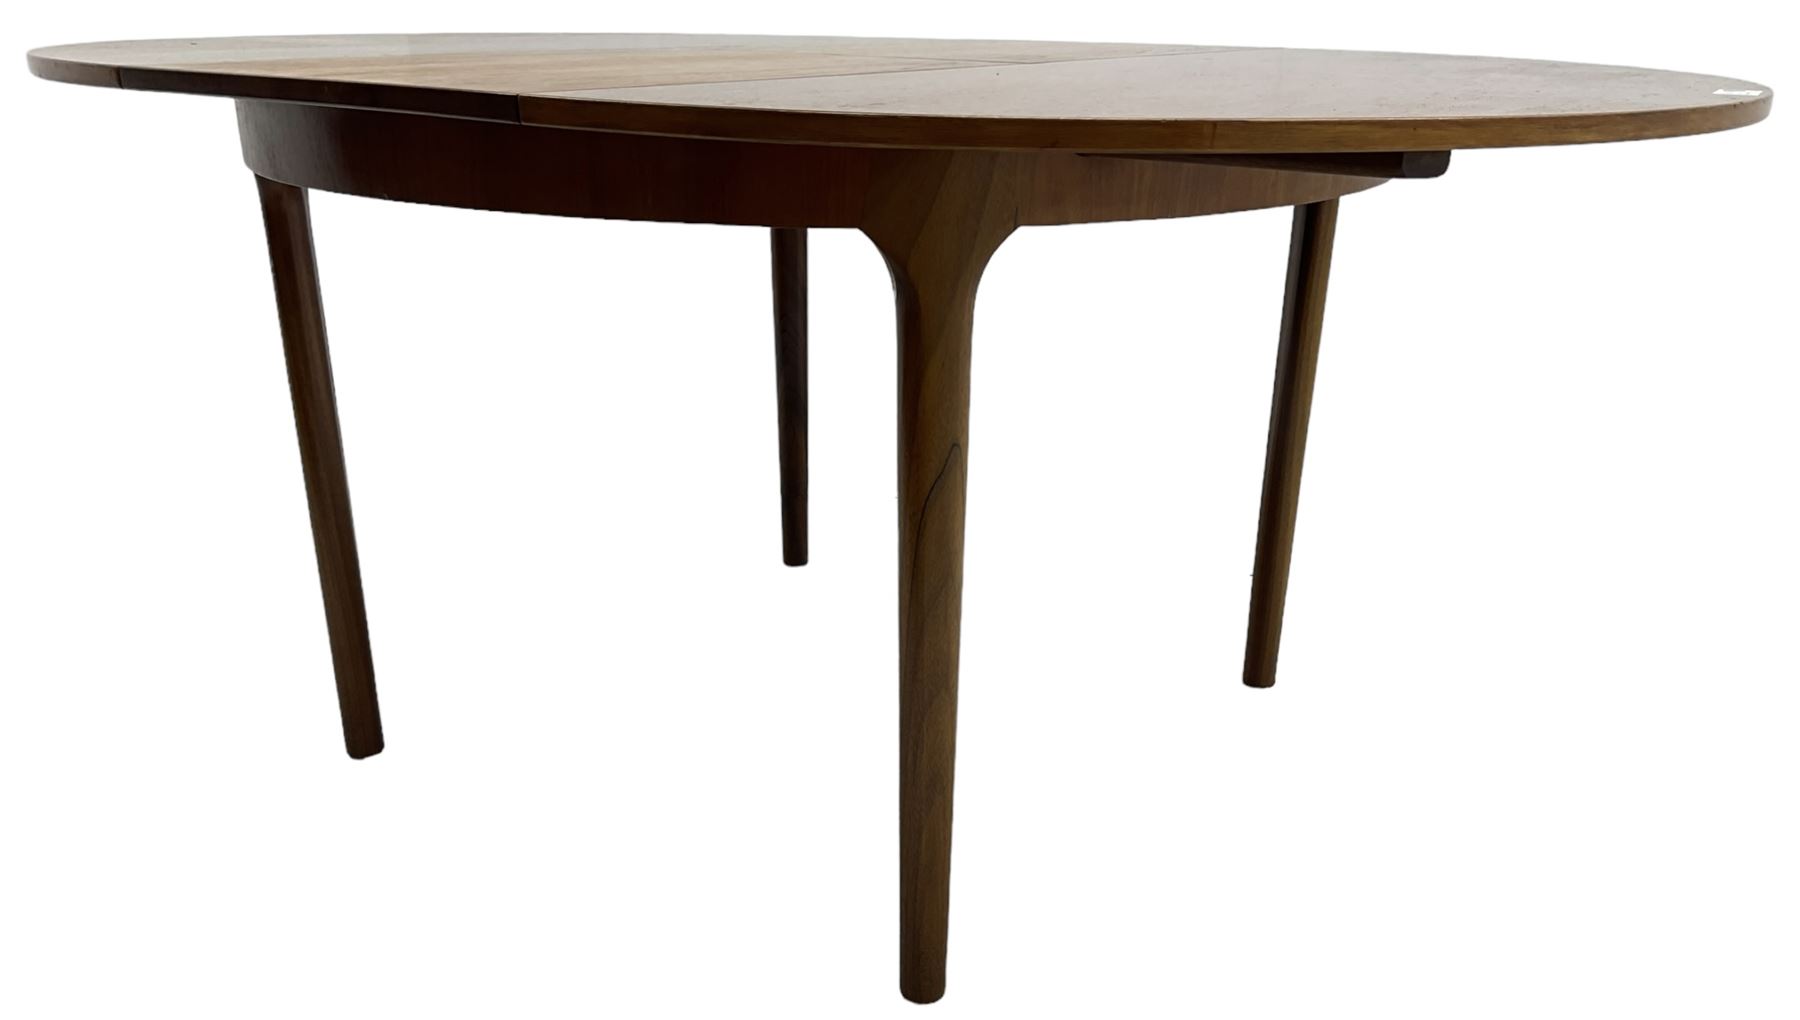 McIntosh - mid-20th century teak extending dining table - Image 4 of 7